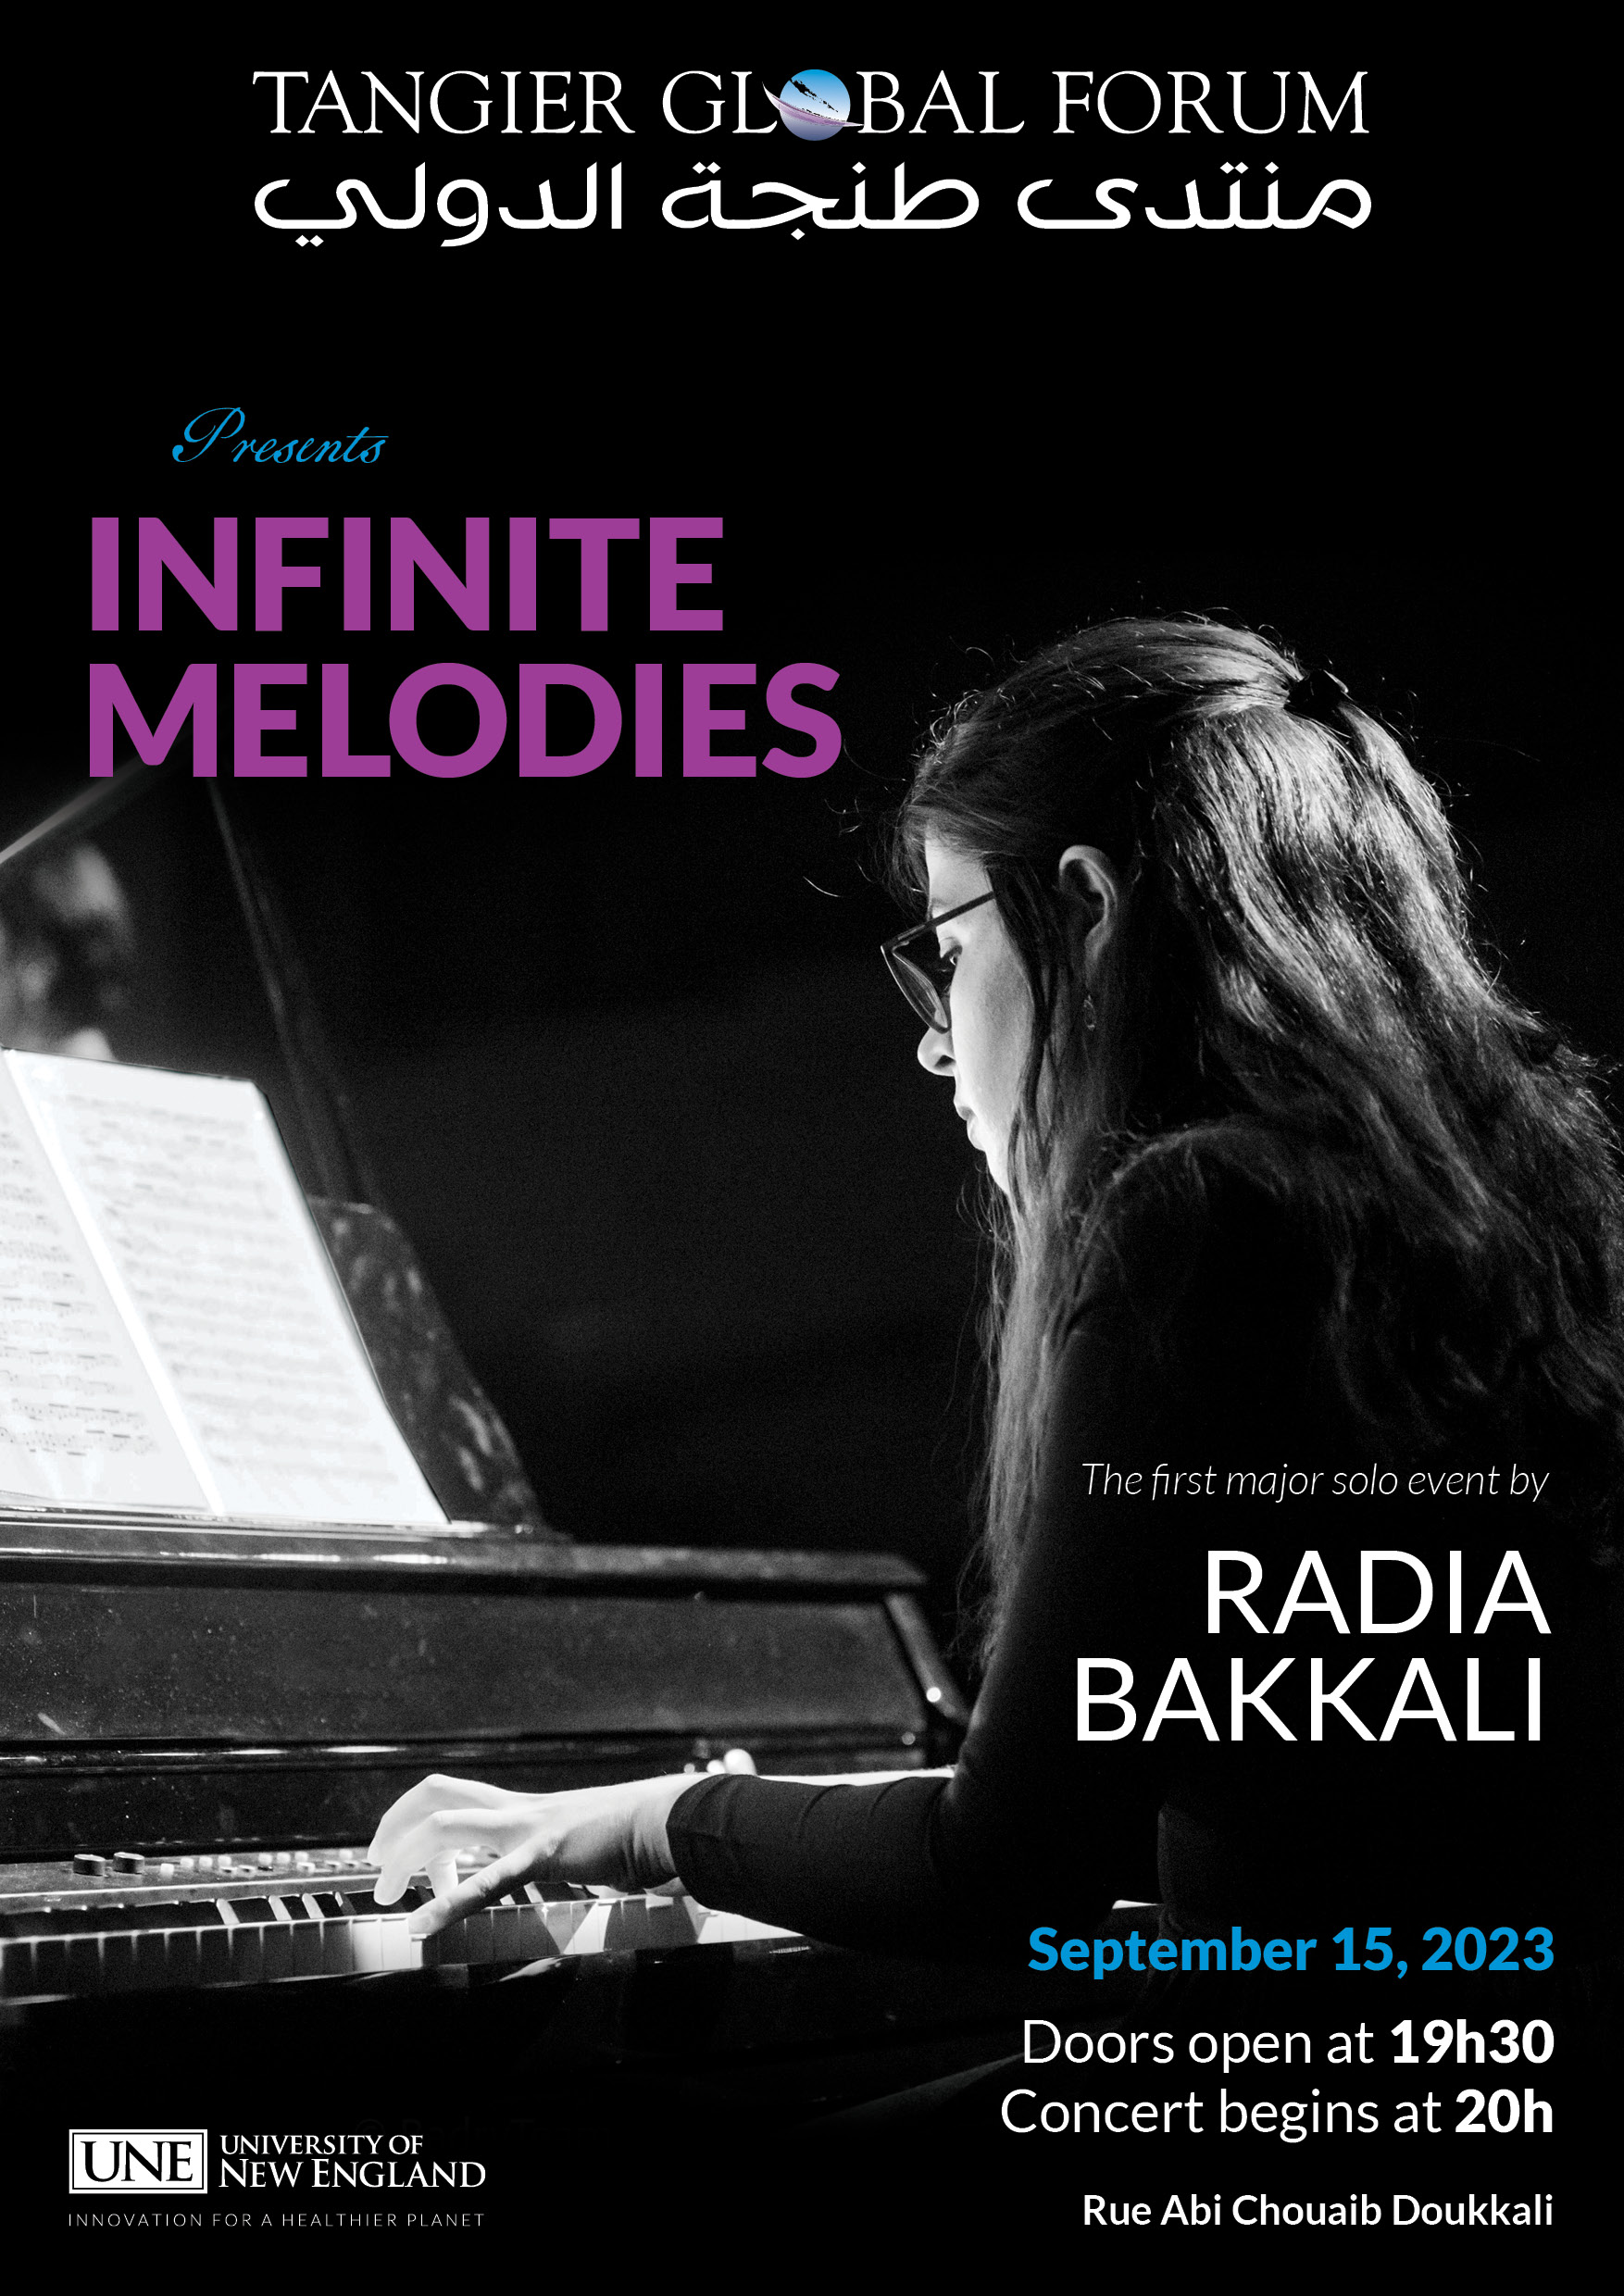 Infinite Melodies by Radia Bakkali